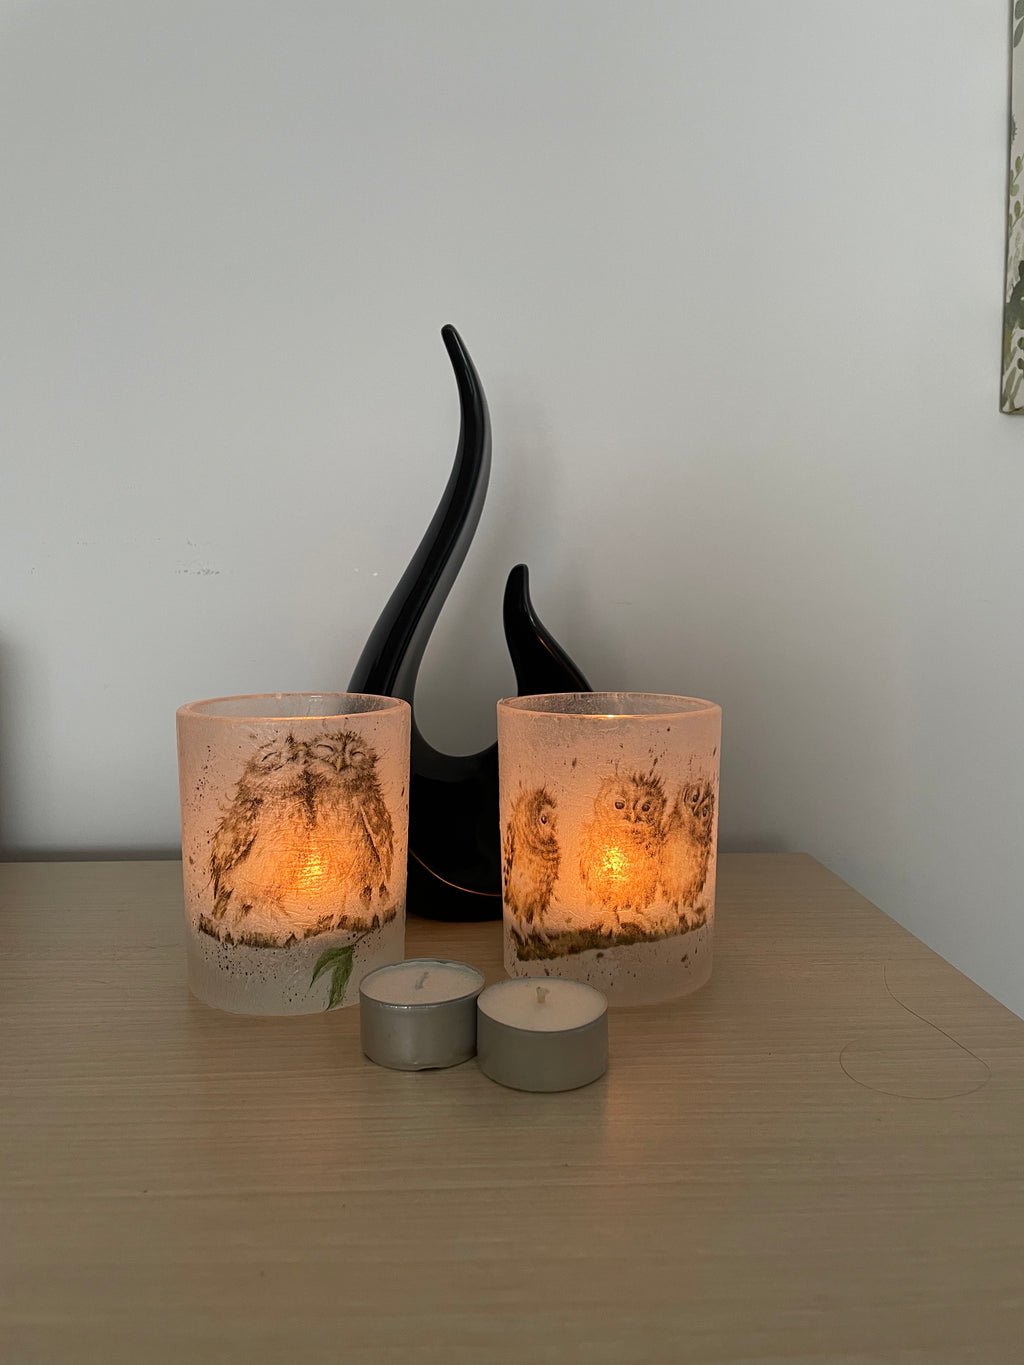 2 Handmade Decoupage Tea Light Holders with Homemade Tea Lights - Cosy Owls